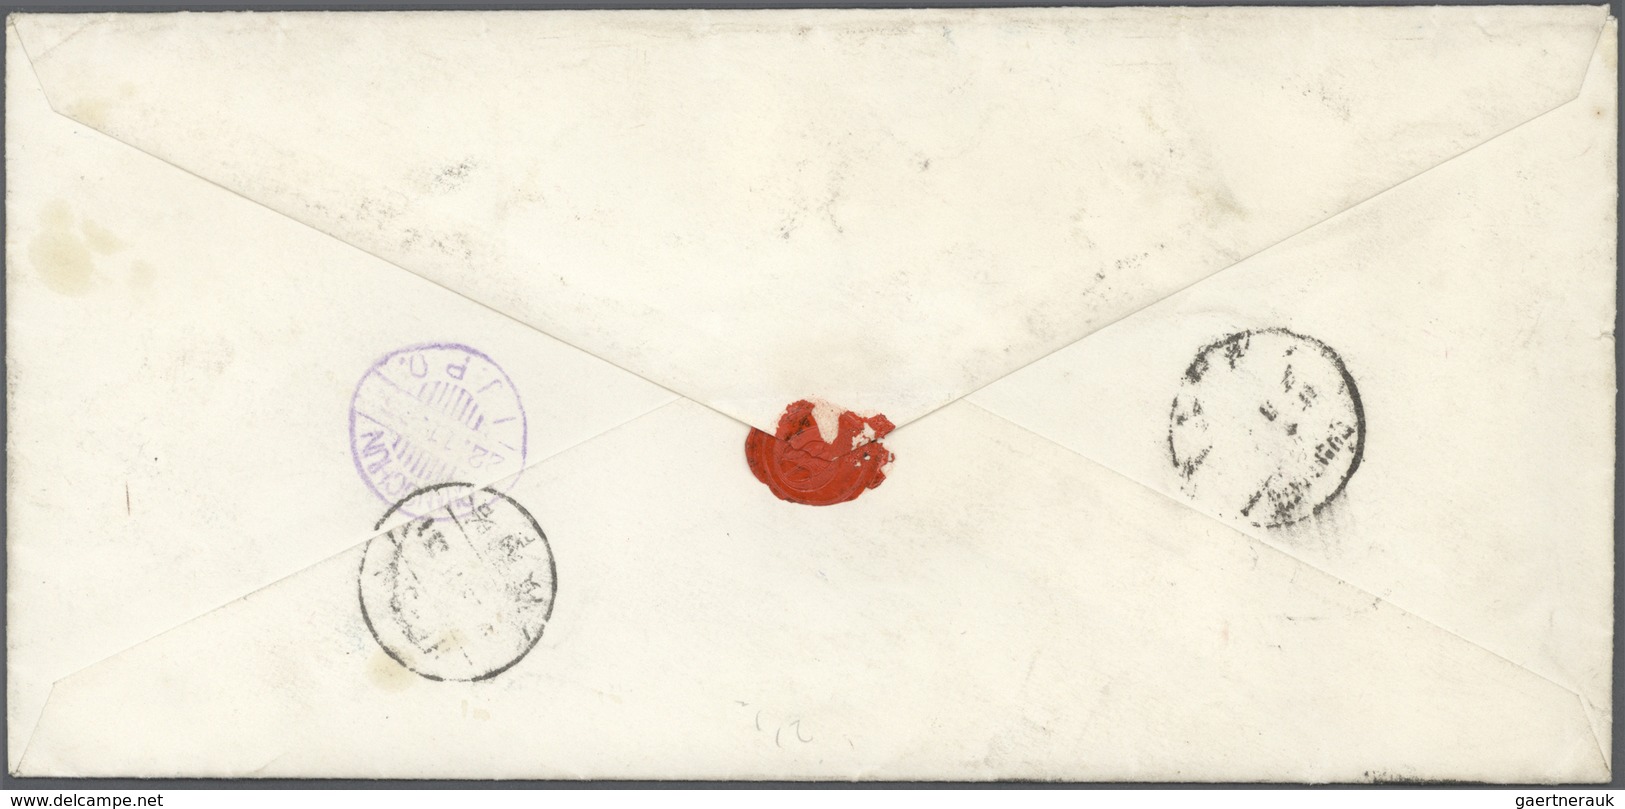 Br Japanische Post In Korea: 1925. Registered Envelope Written From Seoul Addressed To Sweden Bearing ' - Militaire Vrijstelling Van Portkosten